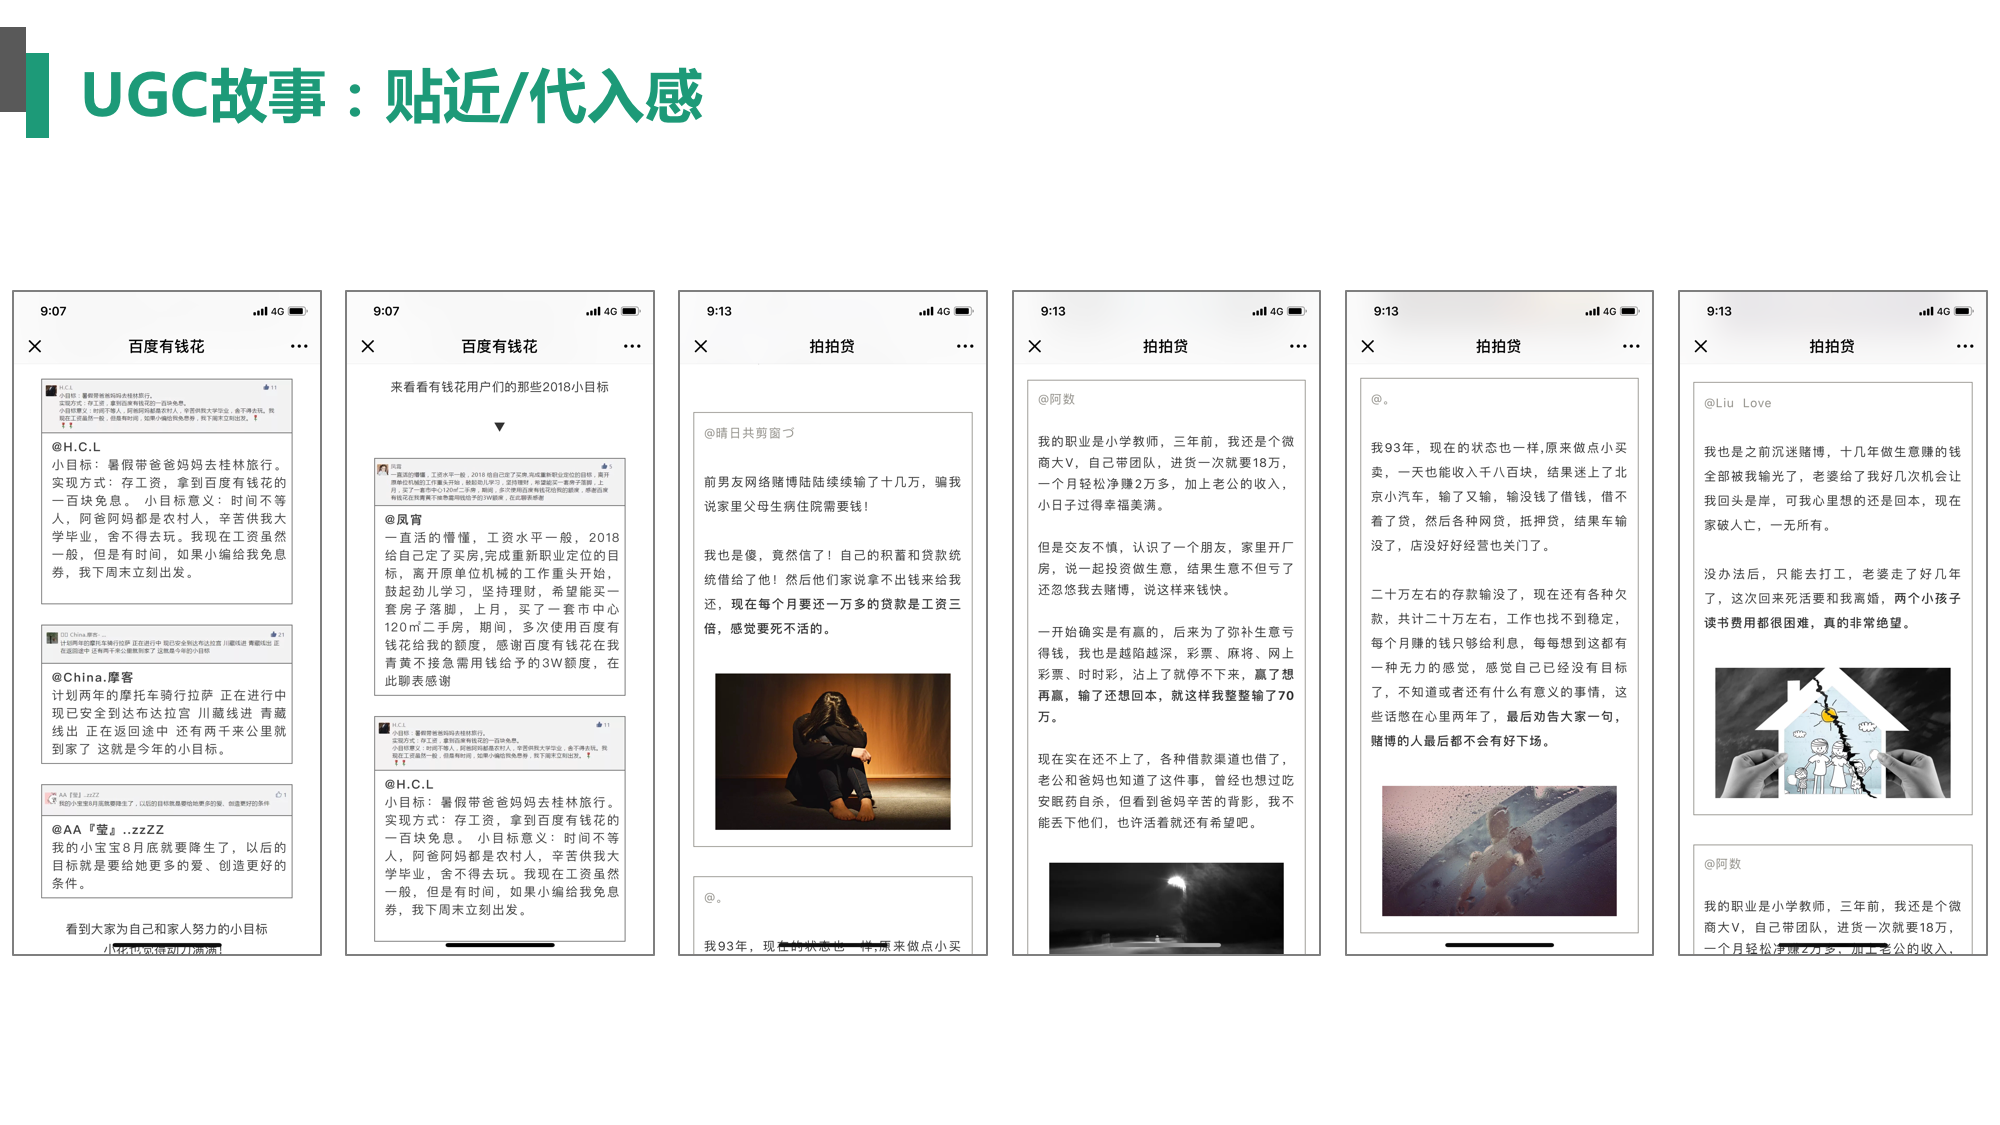 96weixin,新媒体运营,何杰,案例分析,新媒体营销,小程序